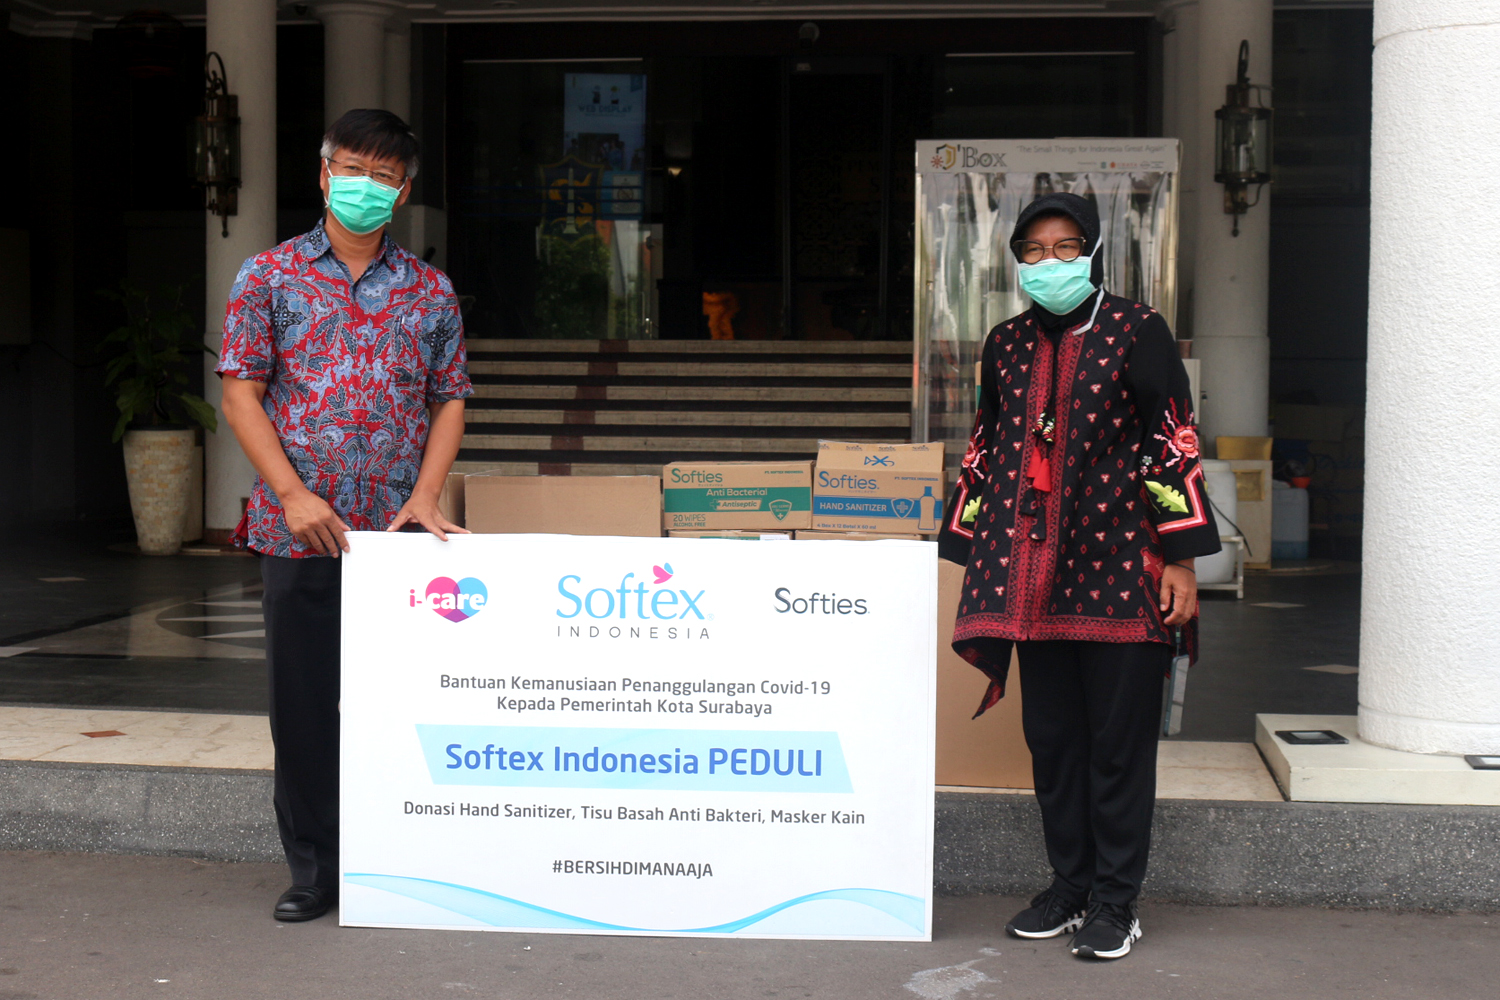 Penyerahan Bantuan - PT Softex Indonesia secara simbolis memberikan bantuan yang diterima oleh wali kota Surabaya Tri Rismaharini di balai kota Surabaya Rabu (15/04/2020)